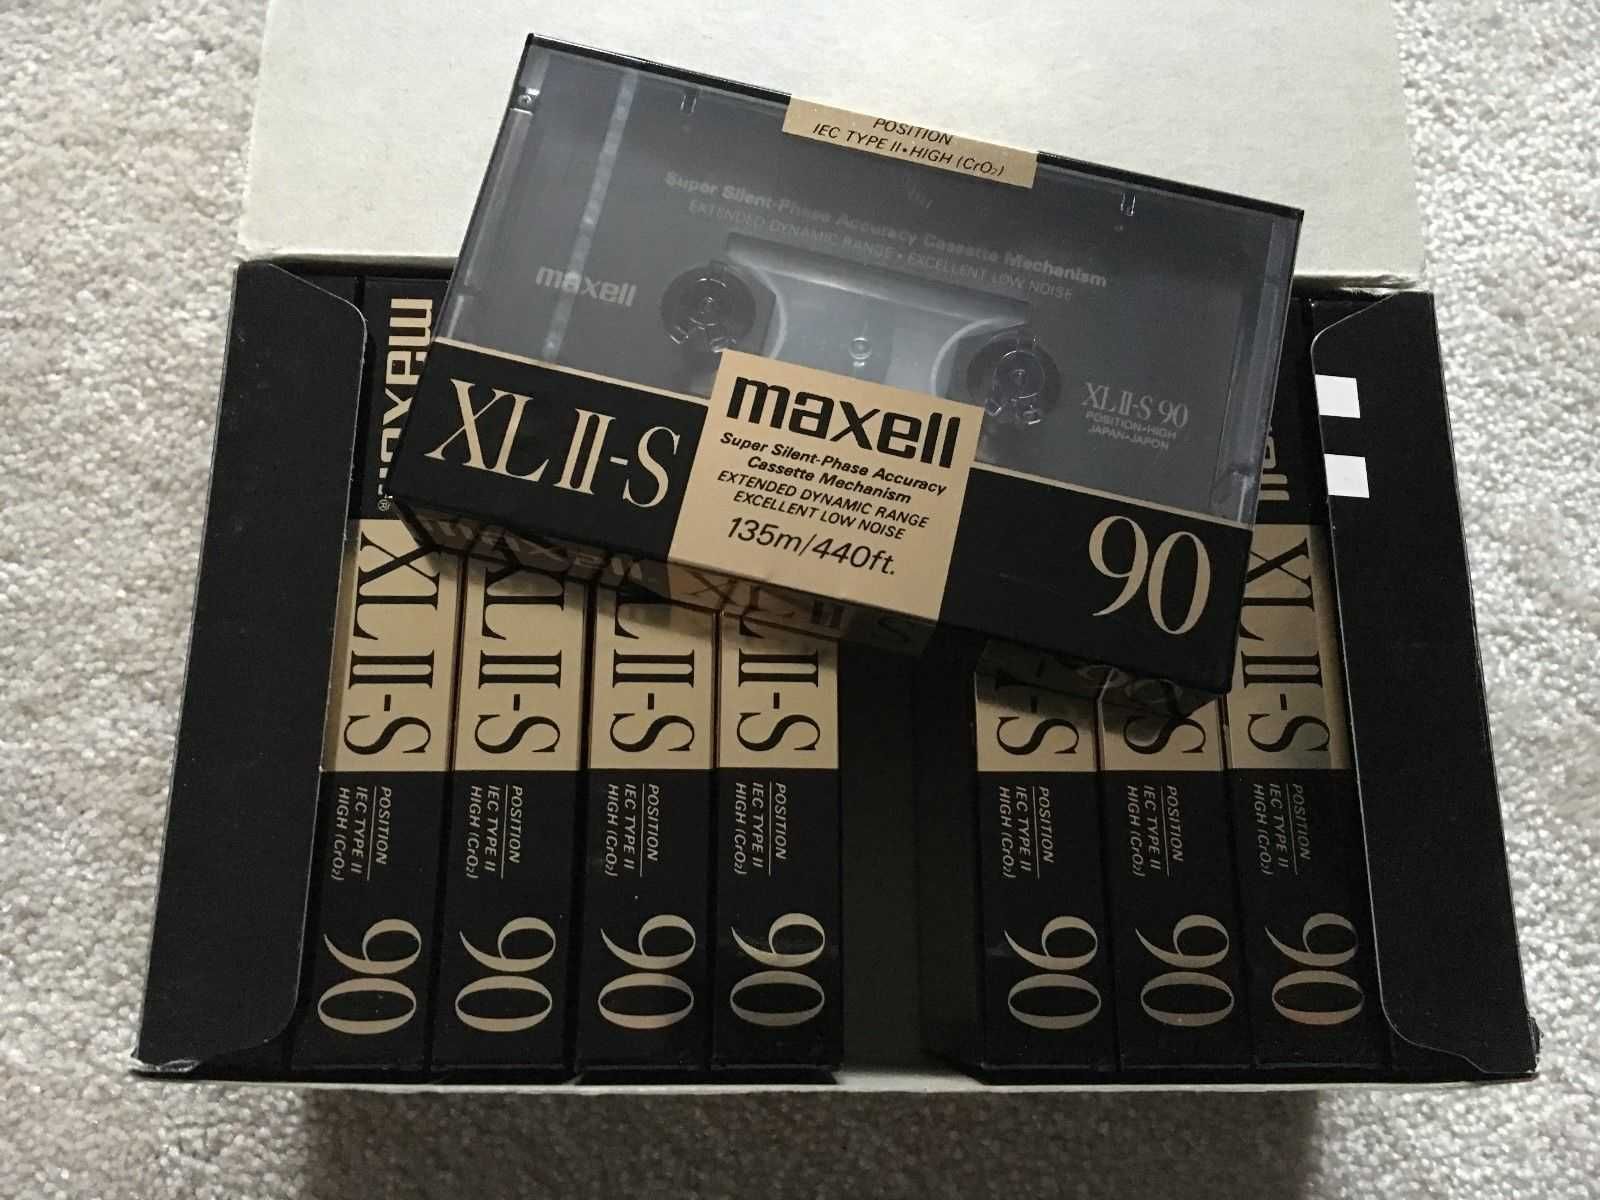 Casete audio Maxell XL II-S